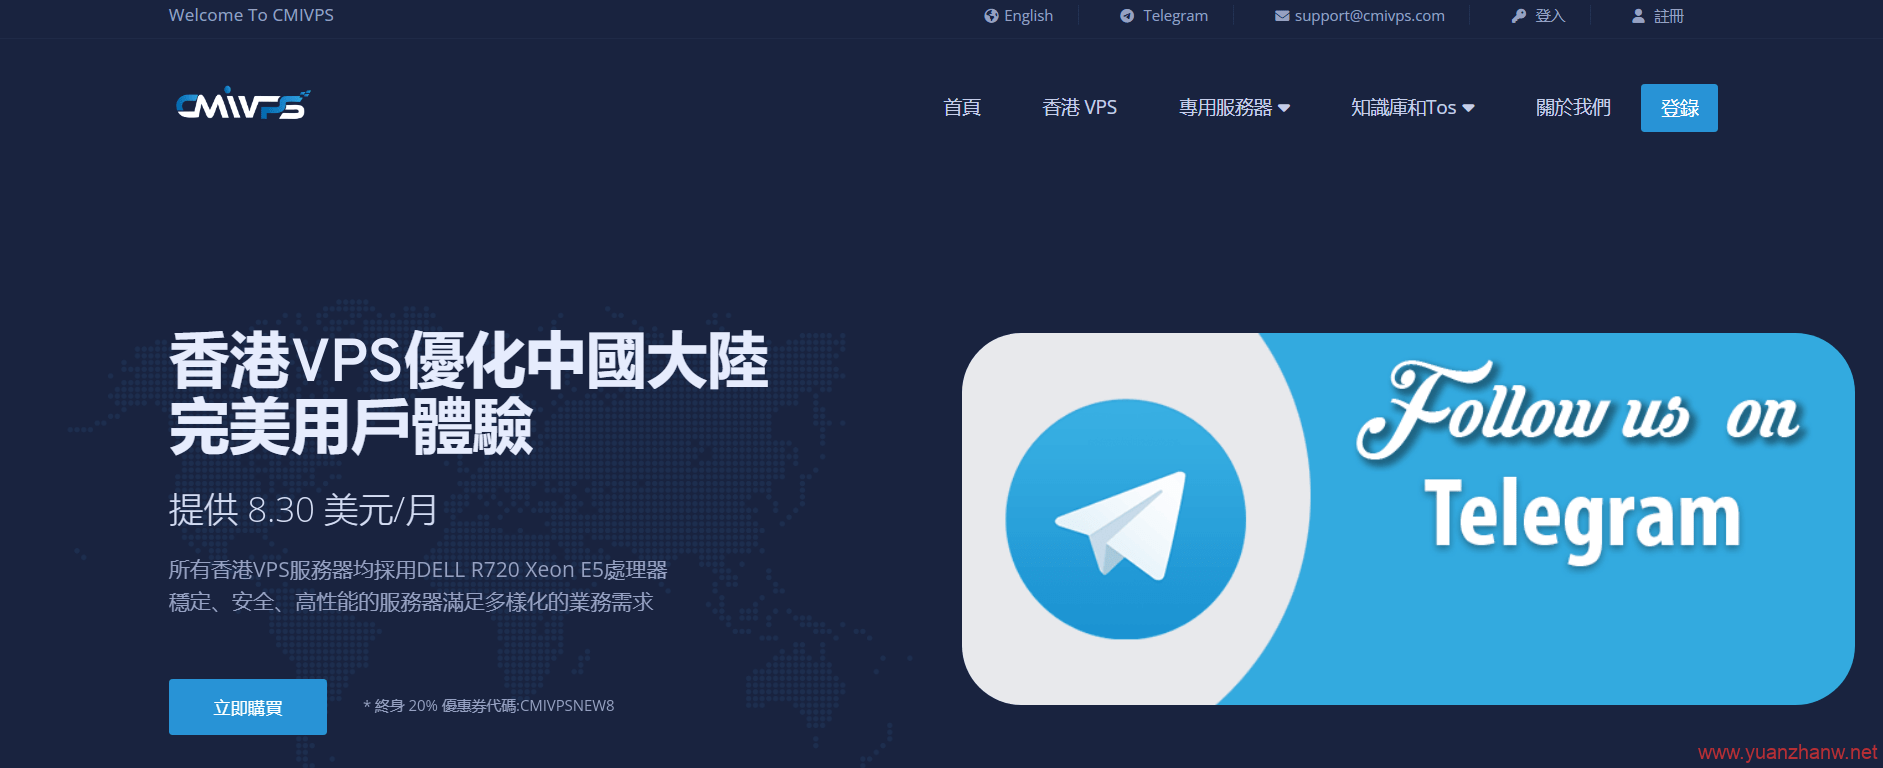 %cmivps：香港vps终身7折优惠，大陆特别优化线路，100M带宽，低至$8/月-猿站网-插图